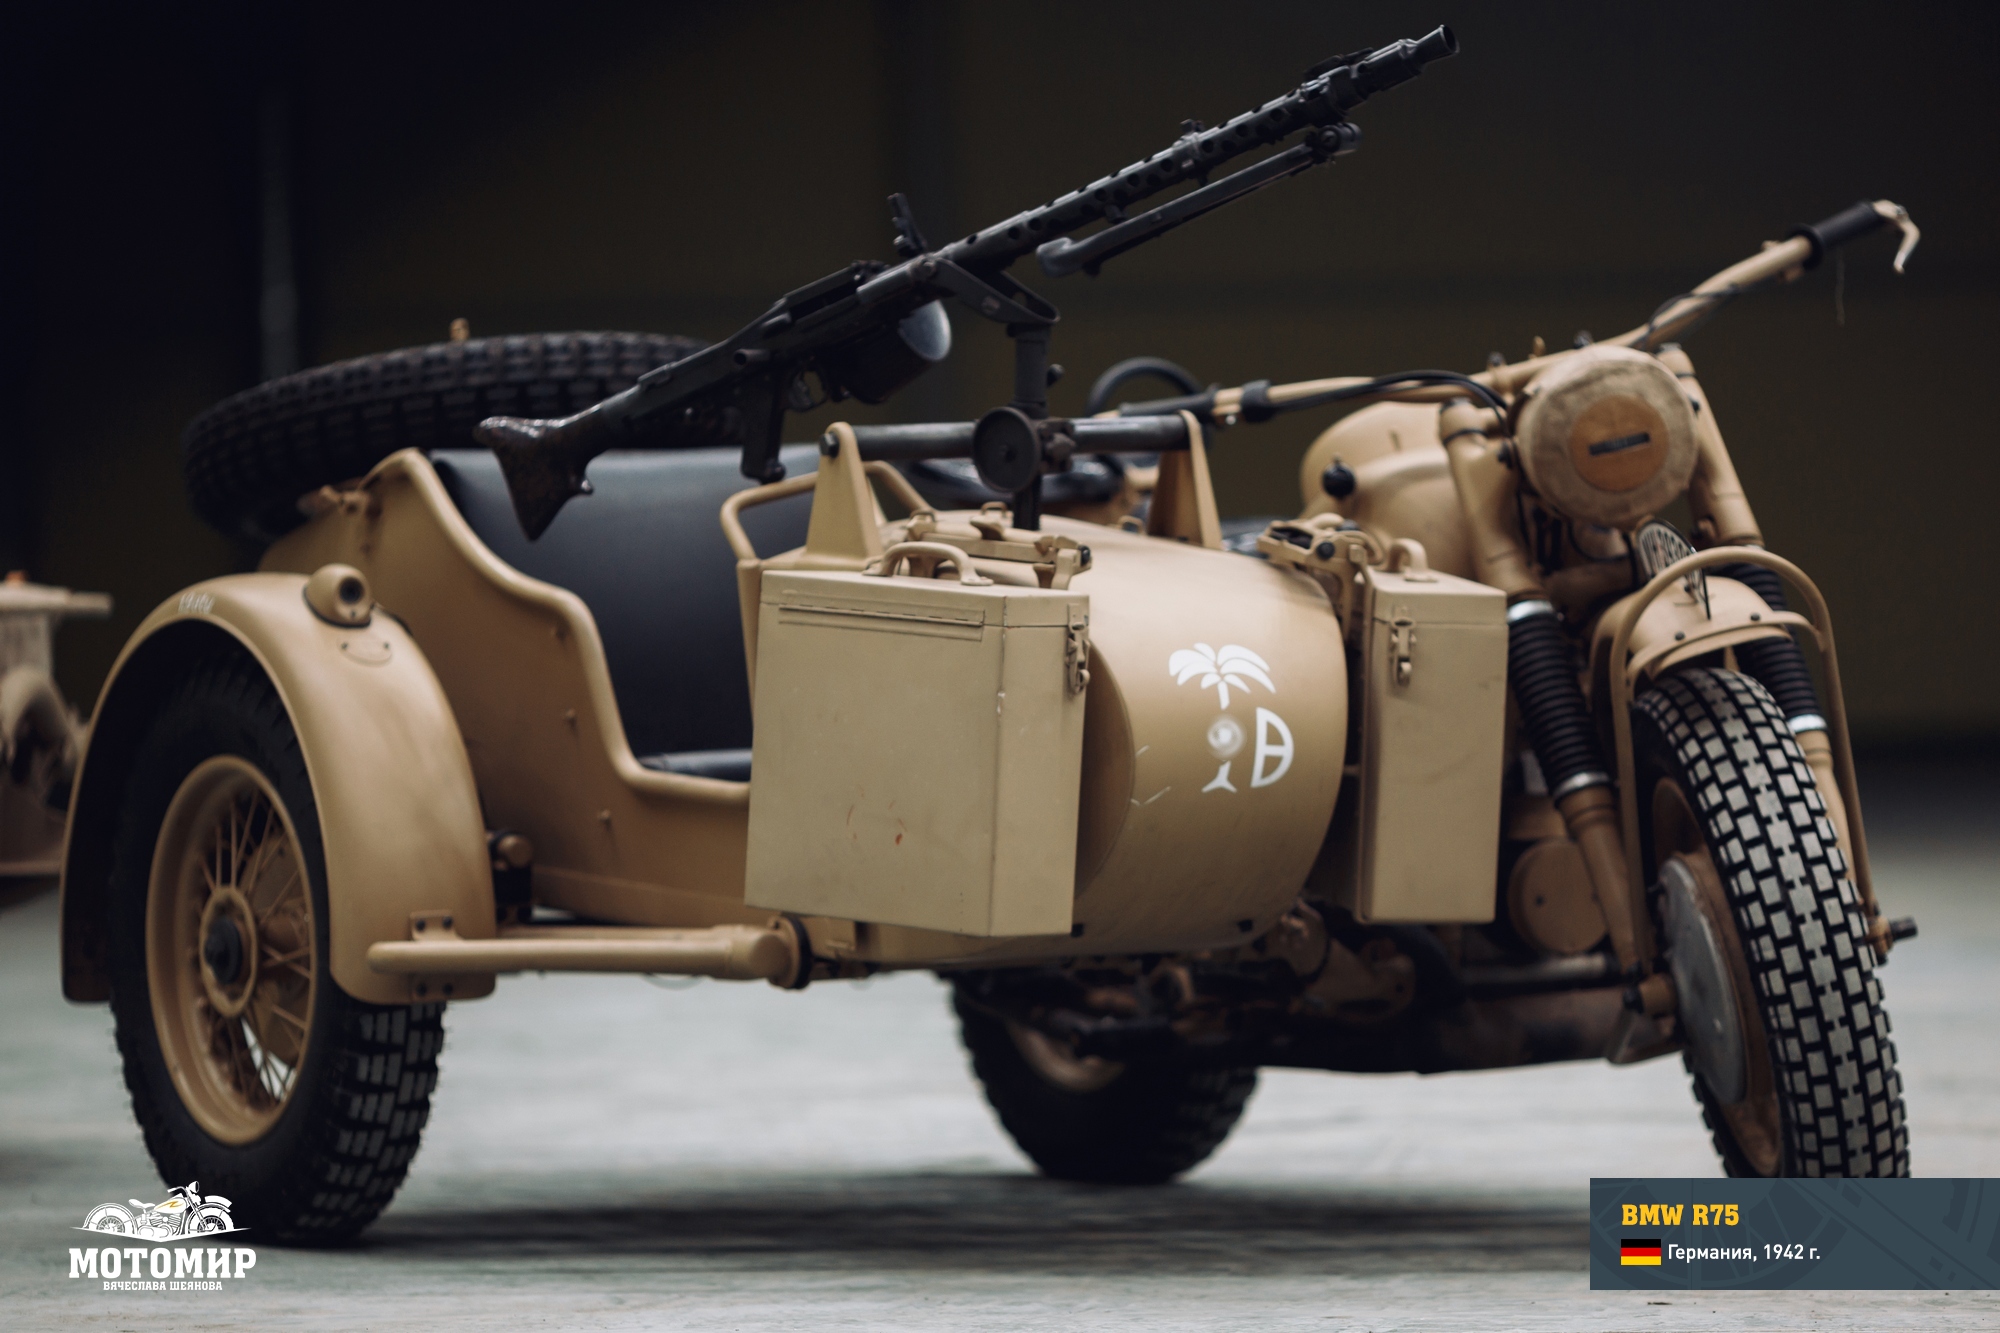 COBI BMW R75 Sahara - 50 elem - WWII German motorcycle and sidecar 2397 